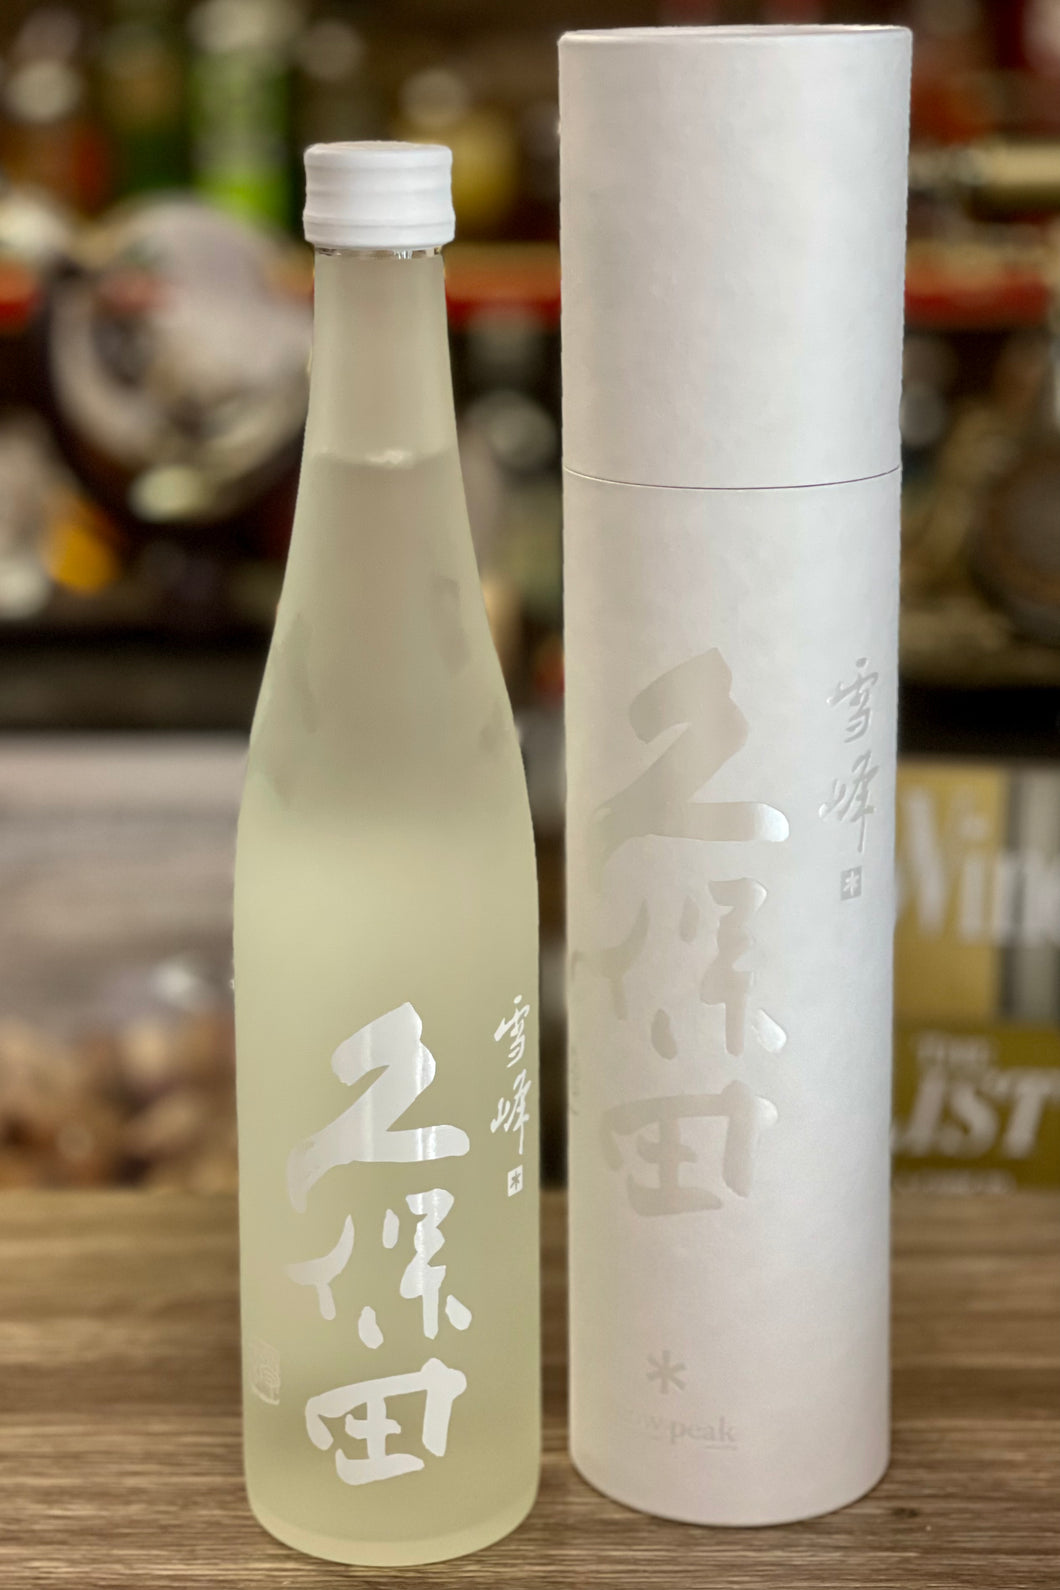 Kubota 'Soujo' Seppou Junmai Daiginjo Sake 500 mL